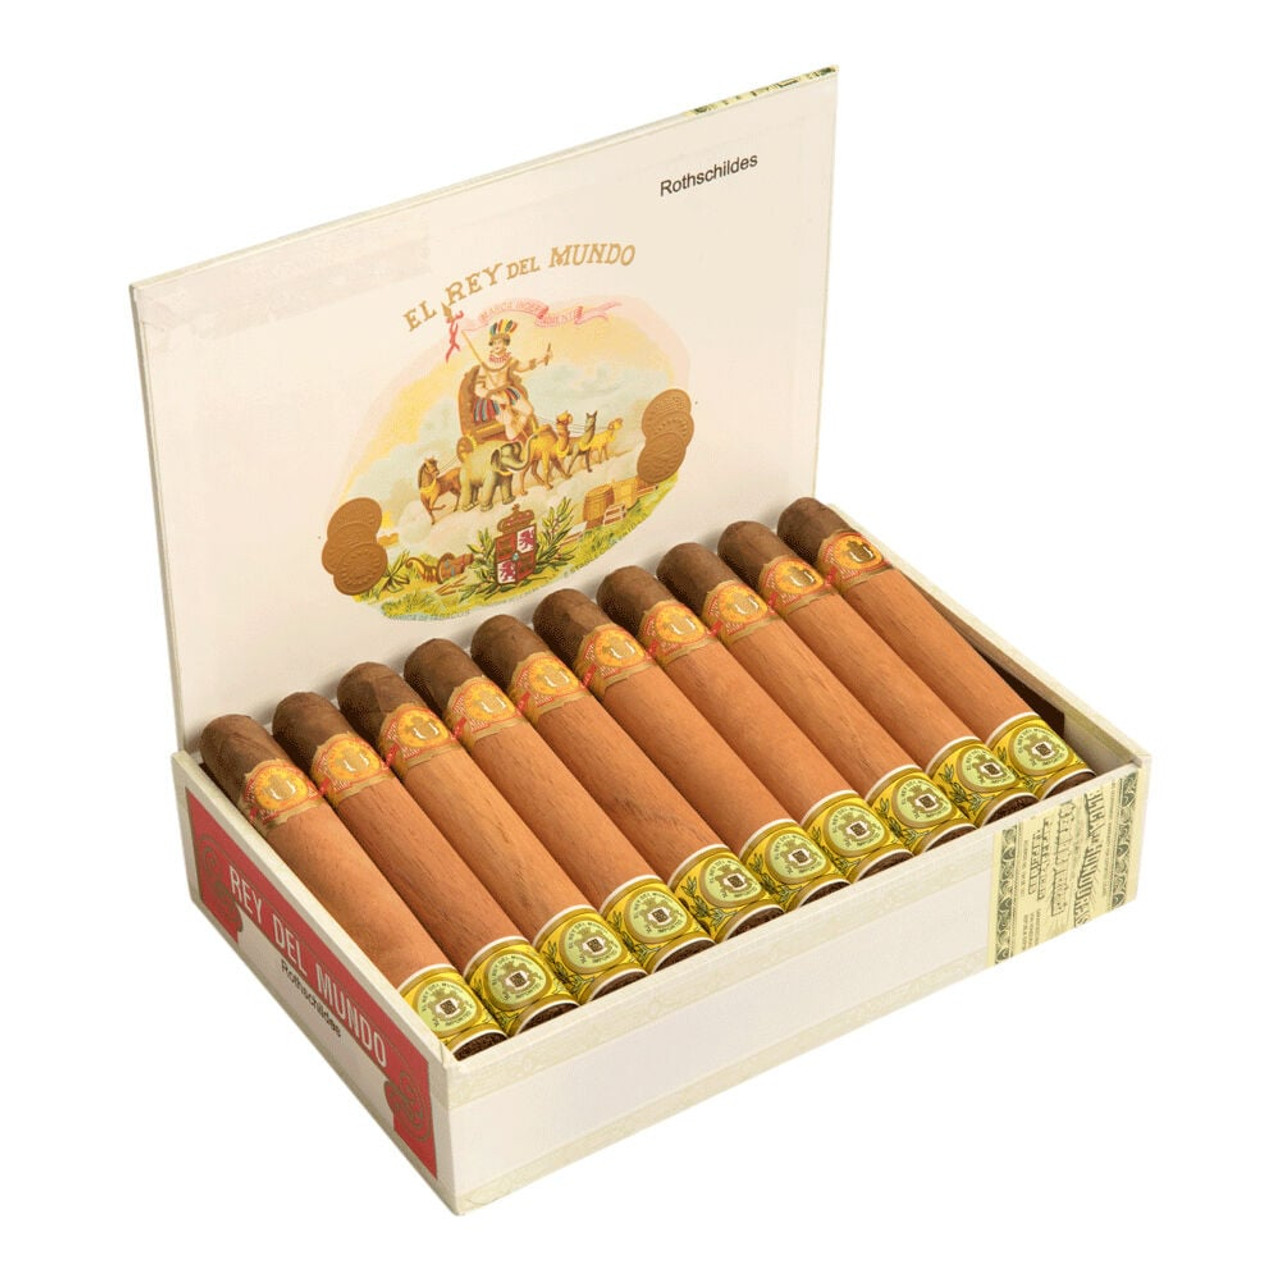 El Rey del Mundo Rothschilde Maduro Cigars - 5 x 50 (Box of 20) Open